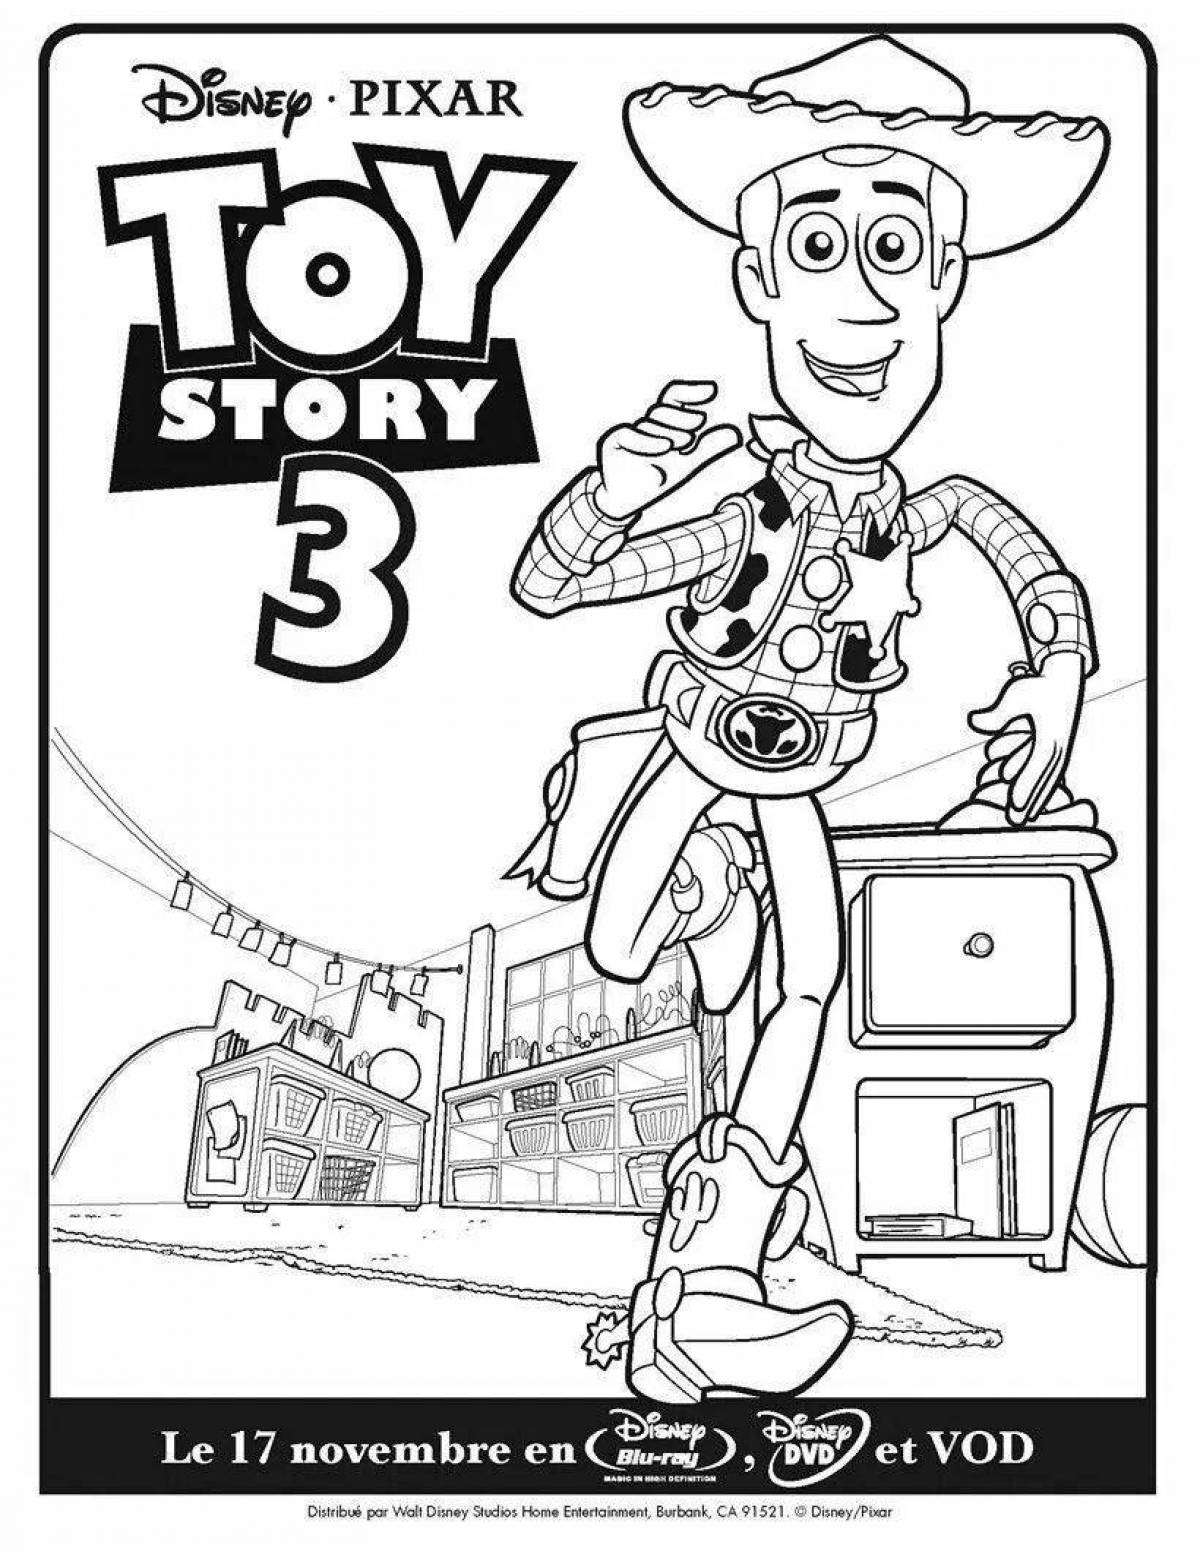 Toy Story's energetic Woody